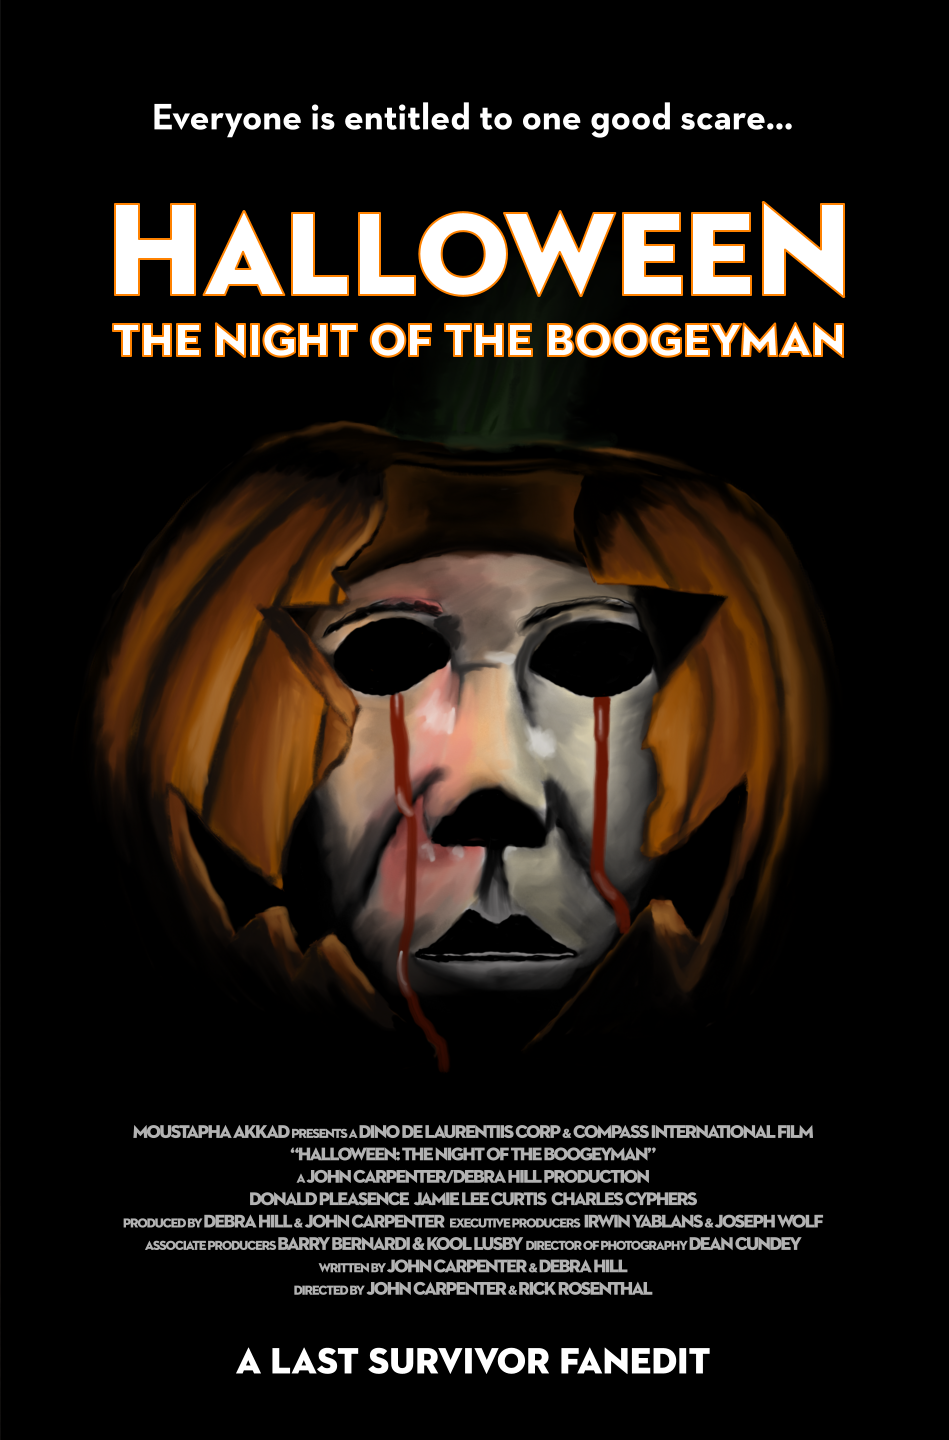 Halloween - The Night of the Boogeyman